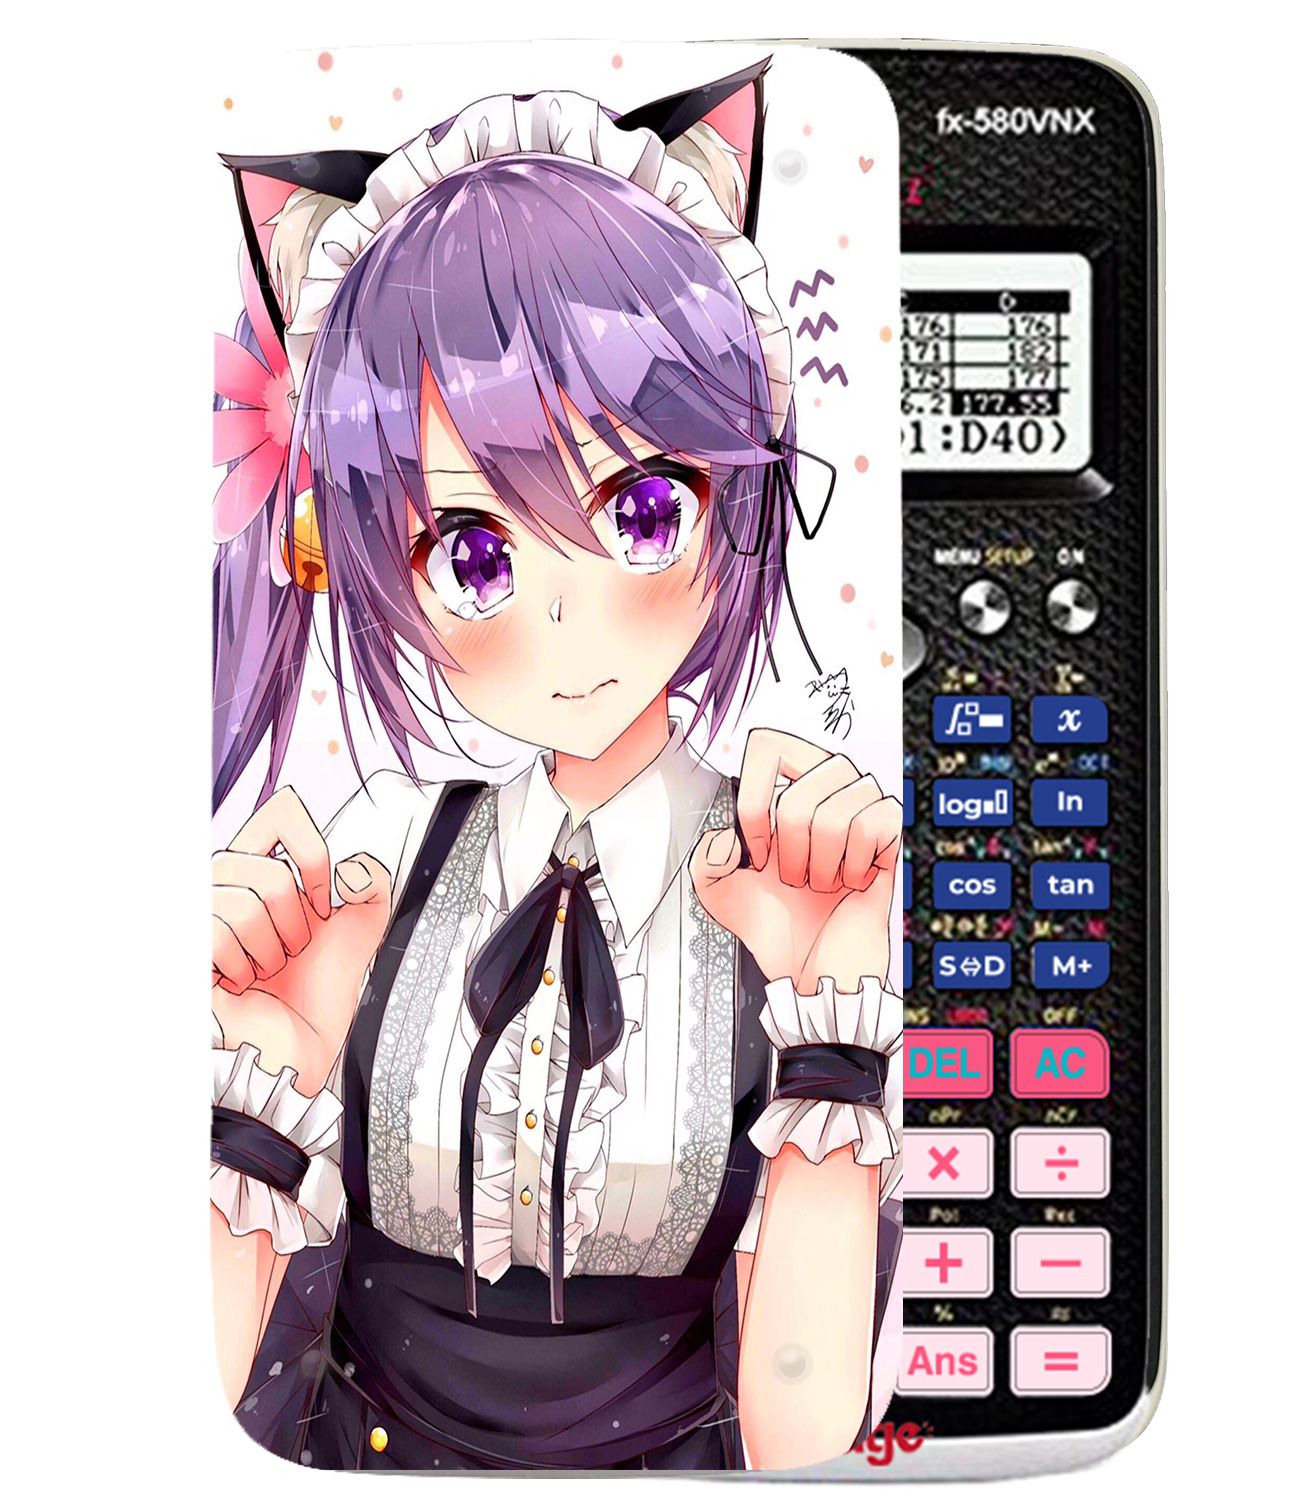 Ốp máy tính Casio FX 580 VNX Nhân vật Anime TAM 050